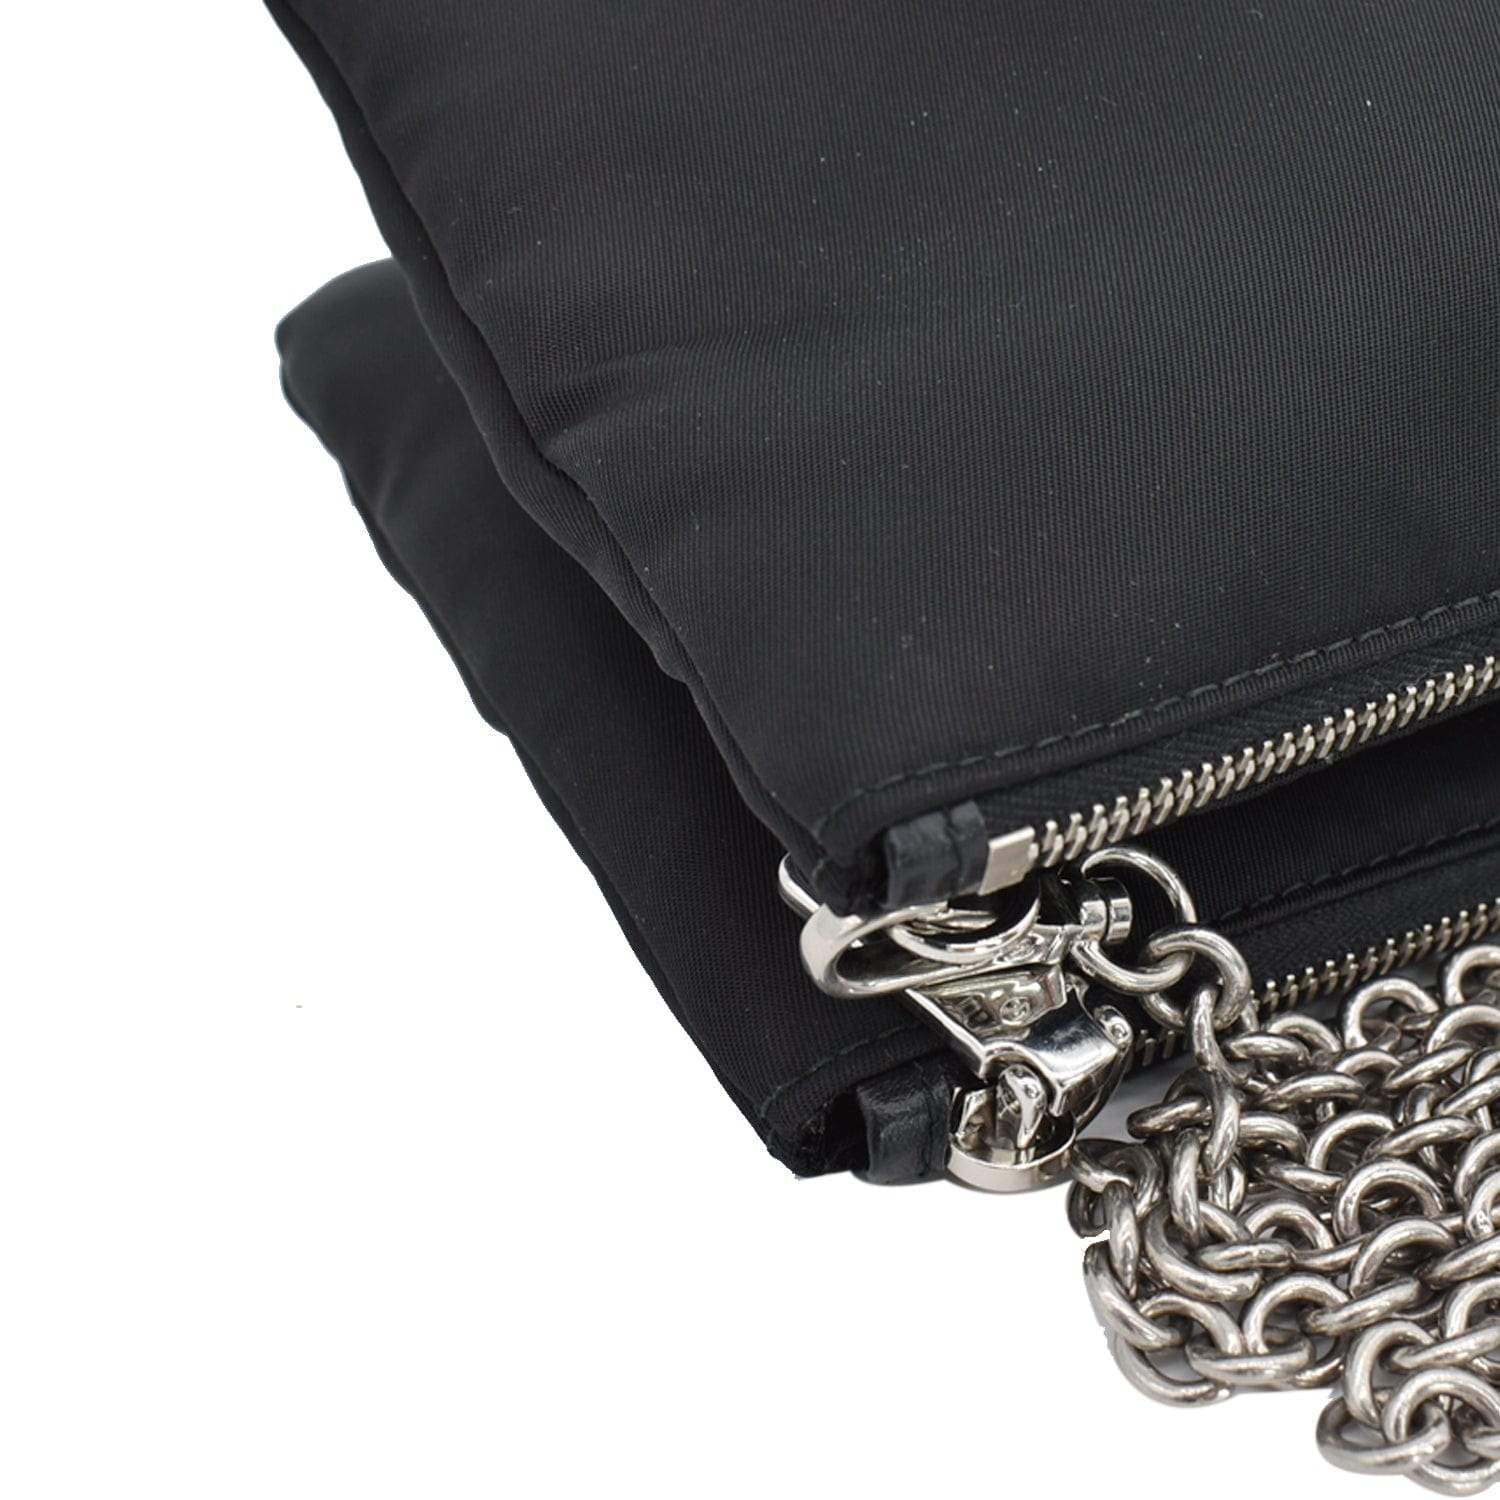 PRADA Mini Nylon Chain Crossbody Bag Black